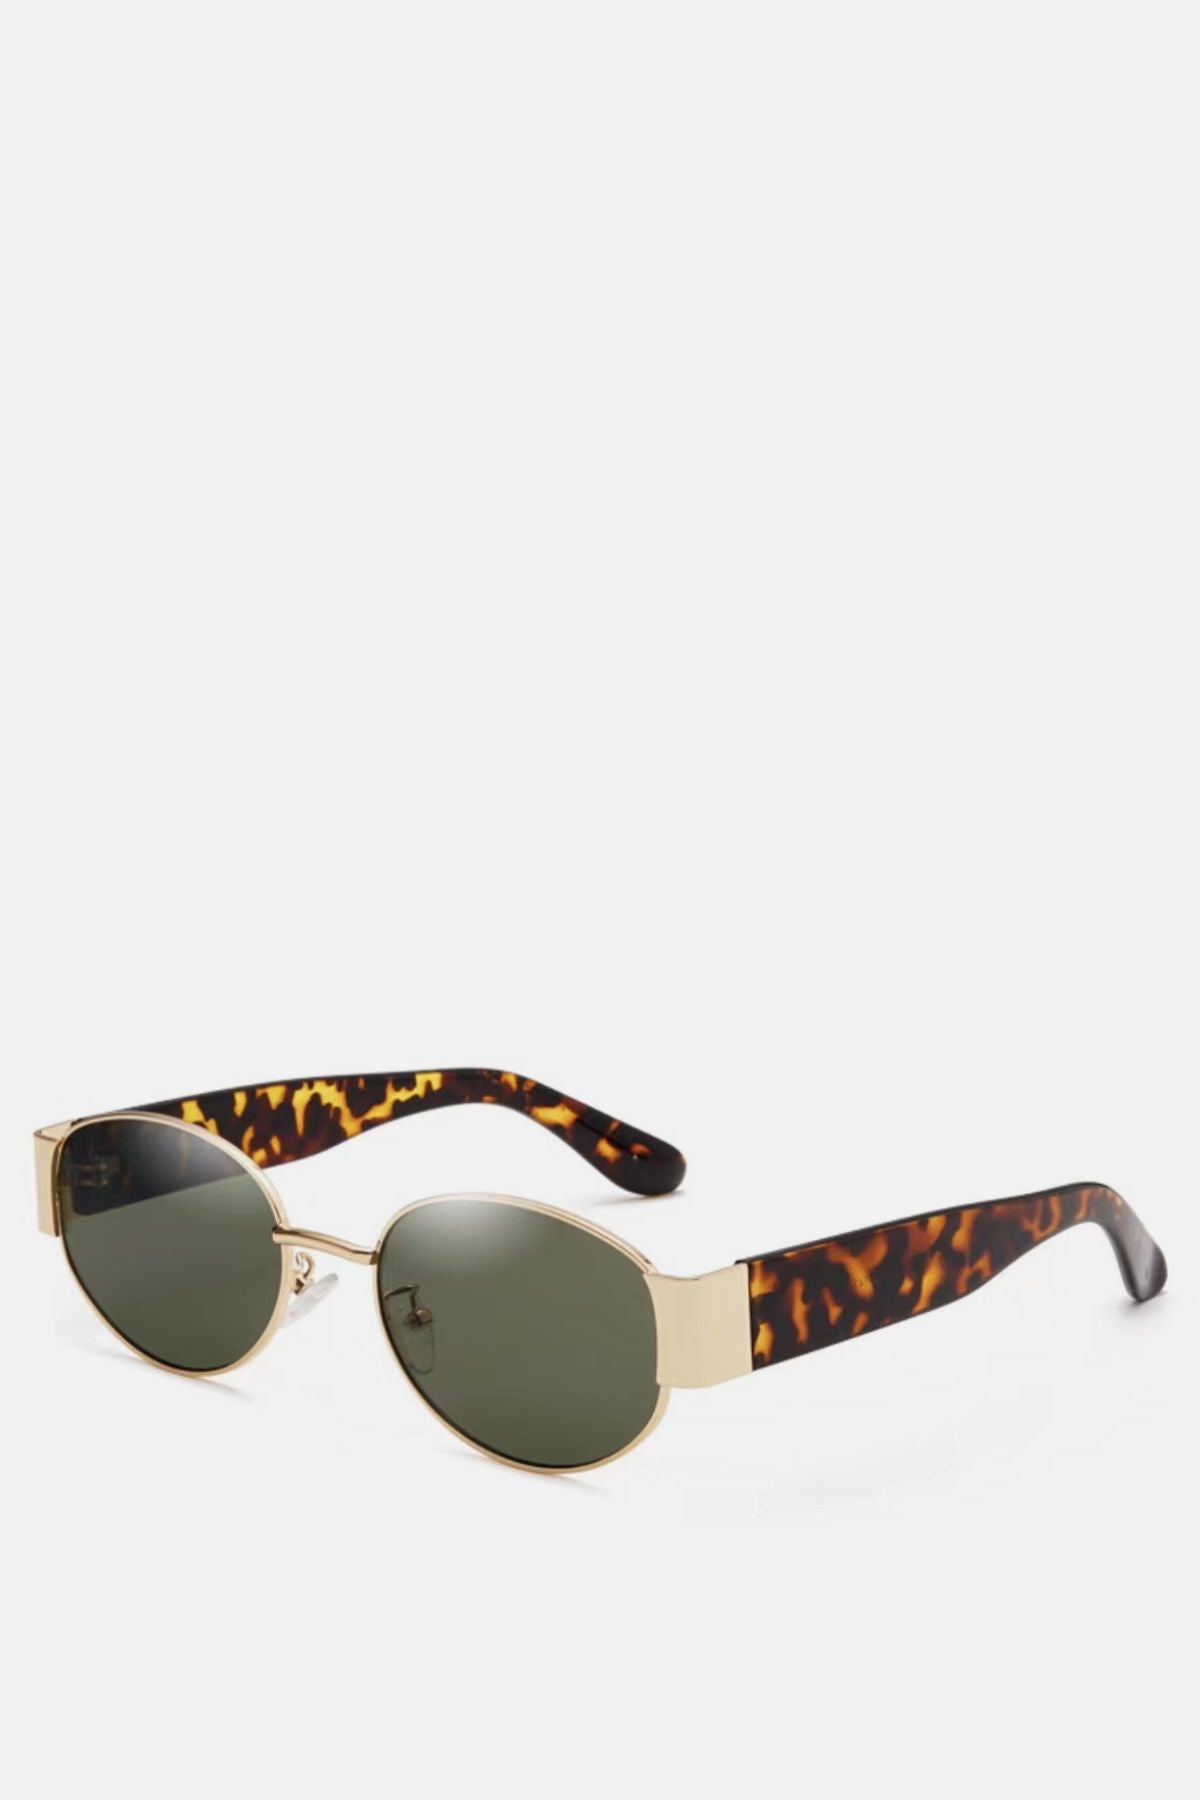 PUGLIA Black & Gold Oval Sunglasses